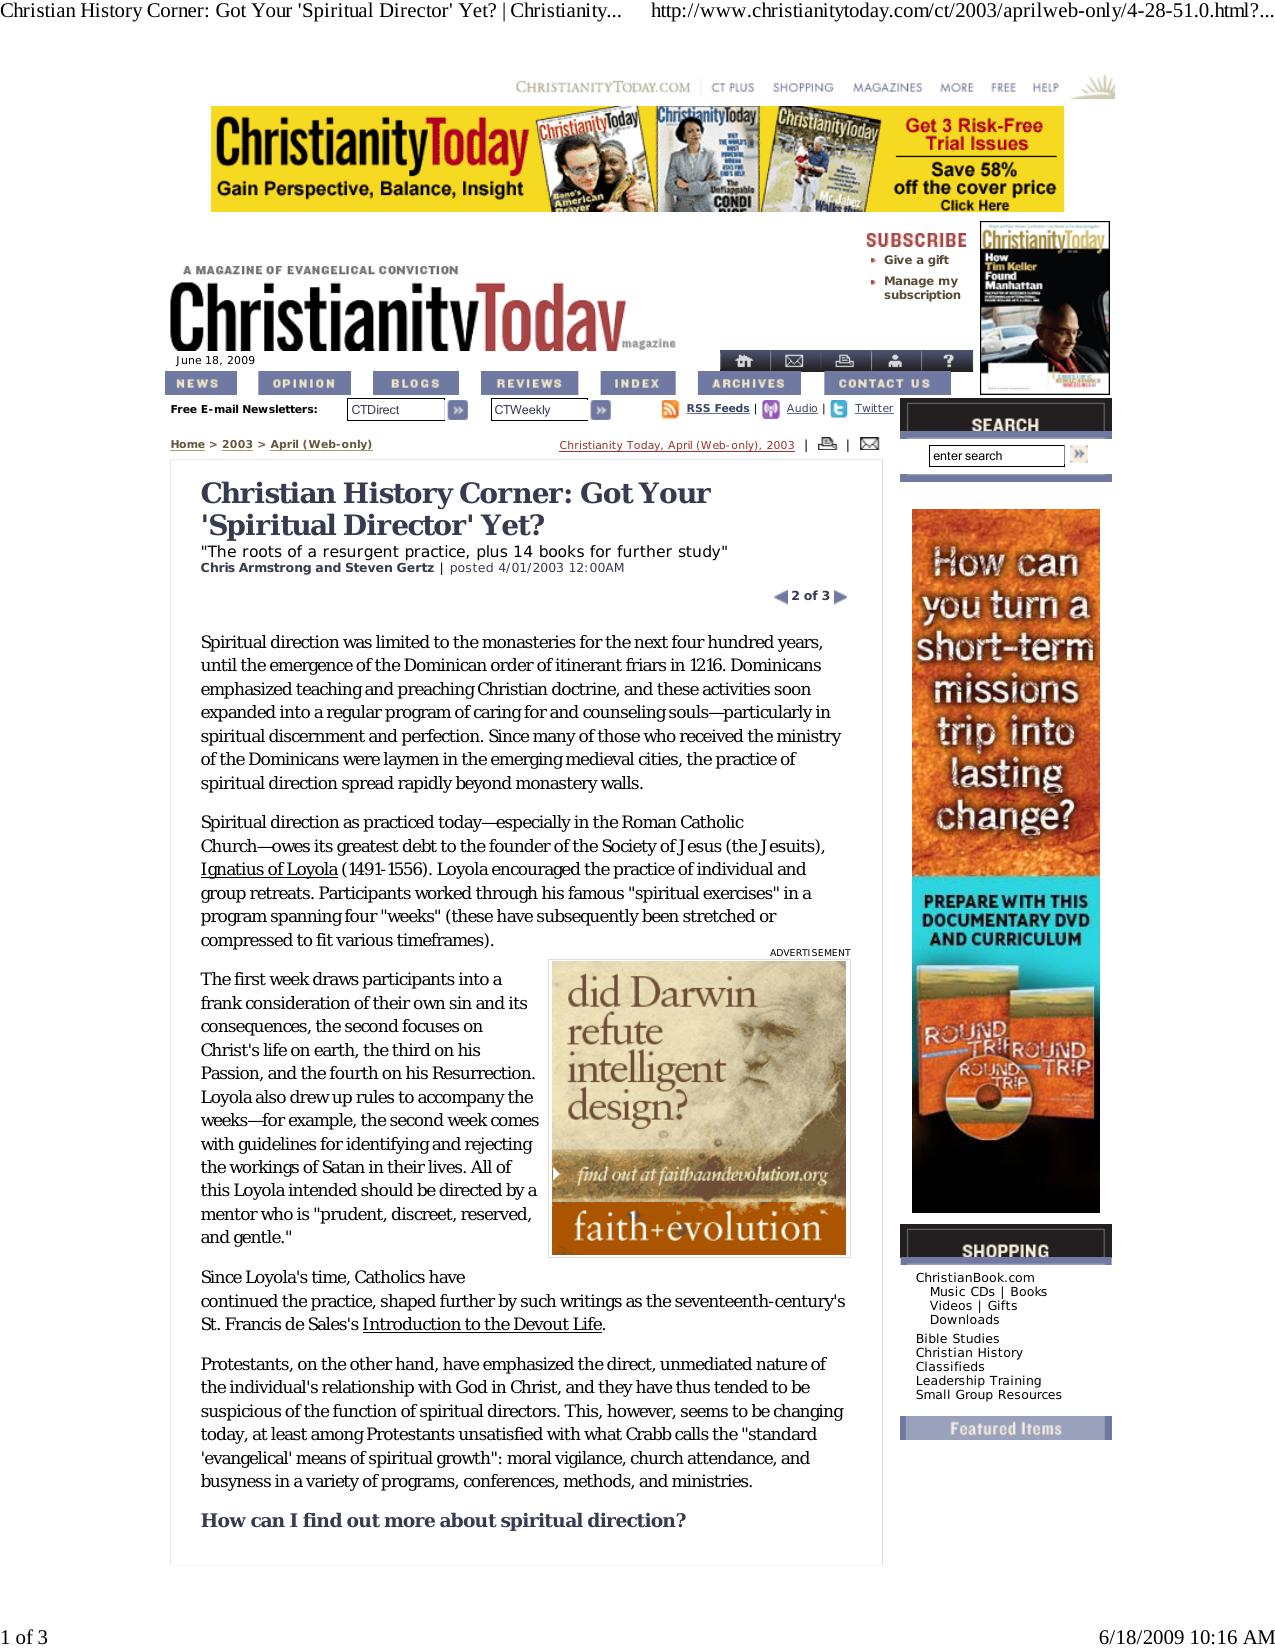 Christian History Corner: G... by Hillary